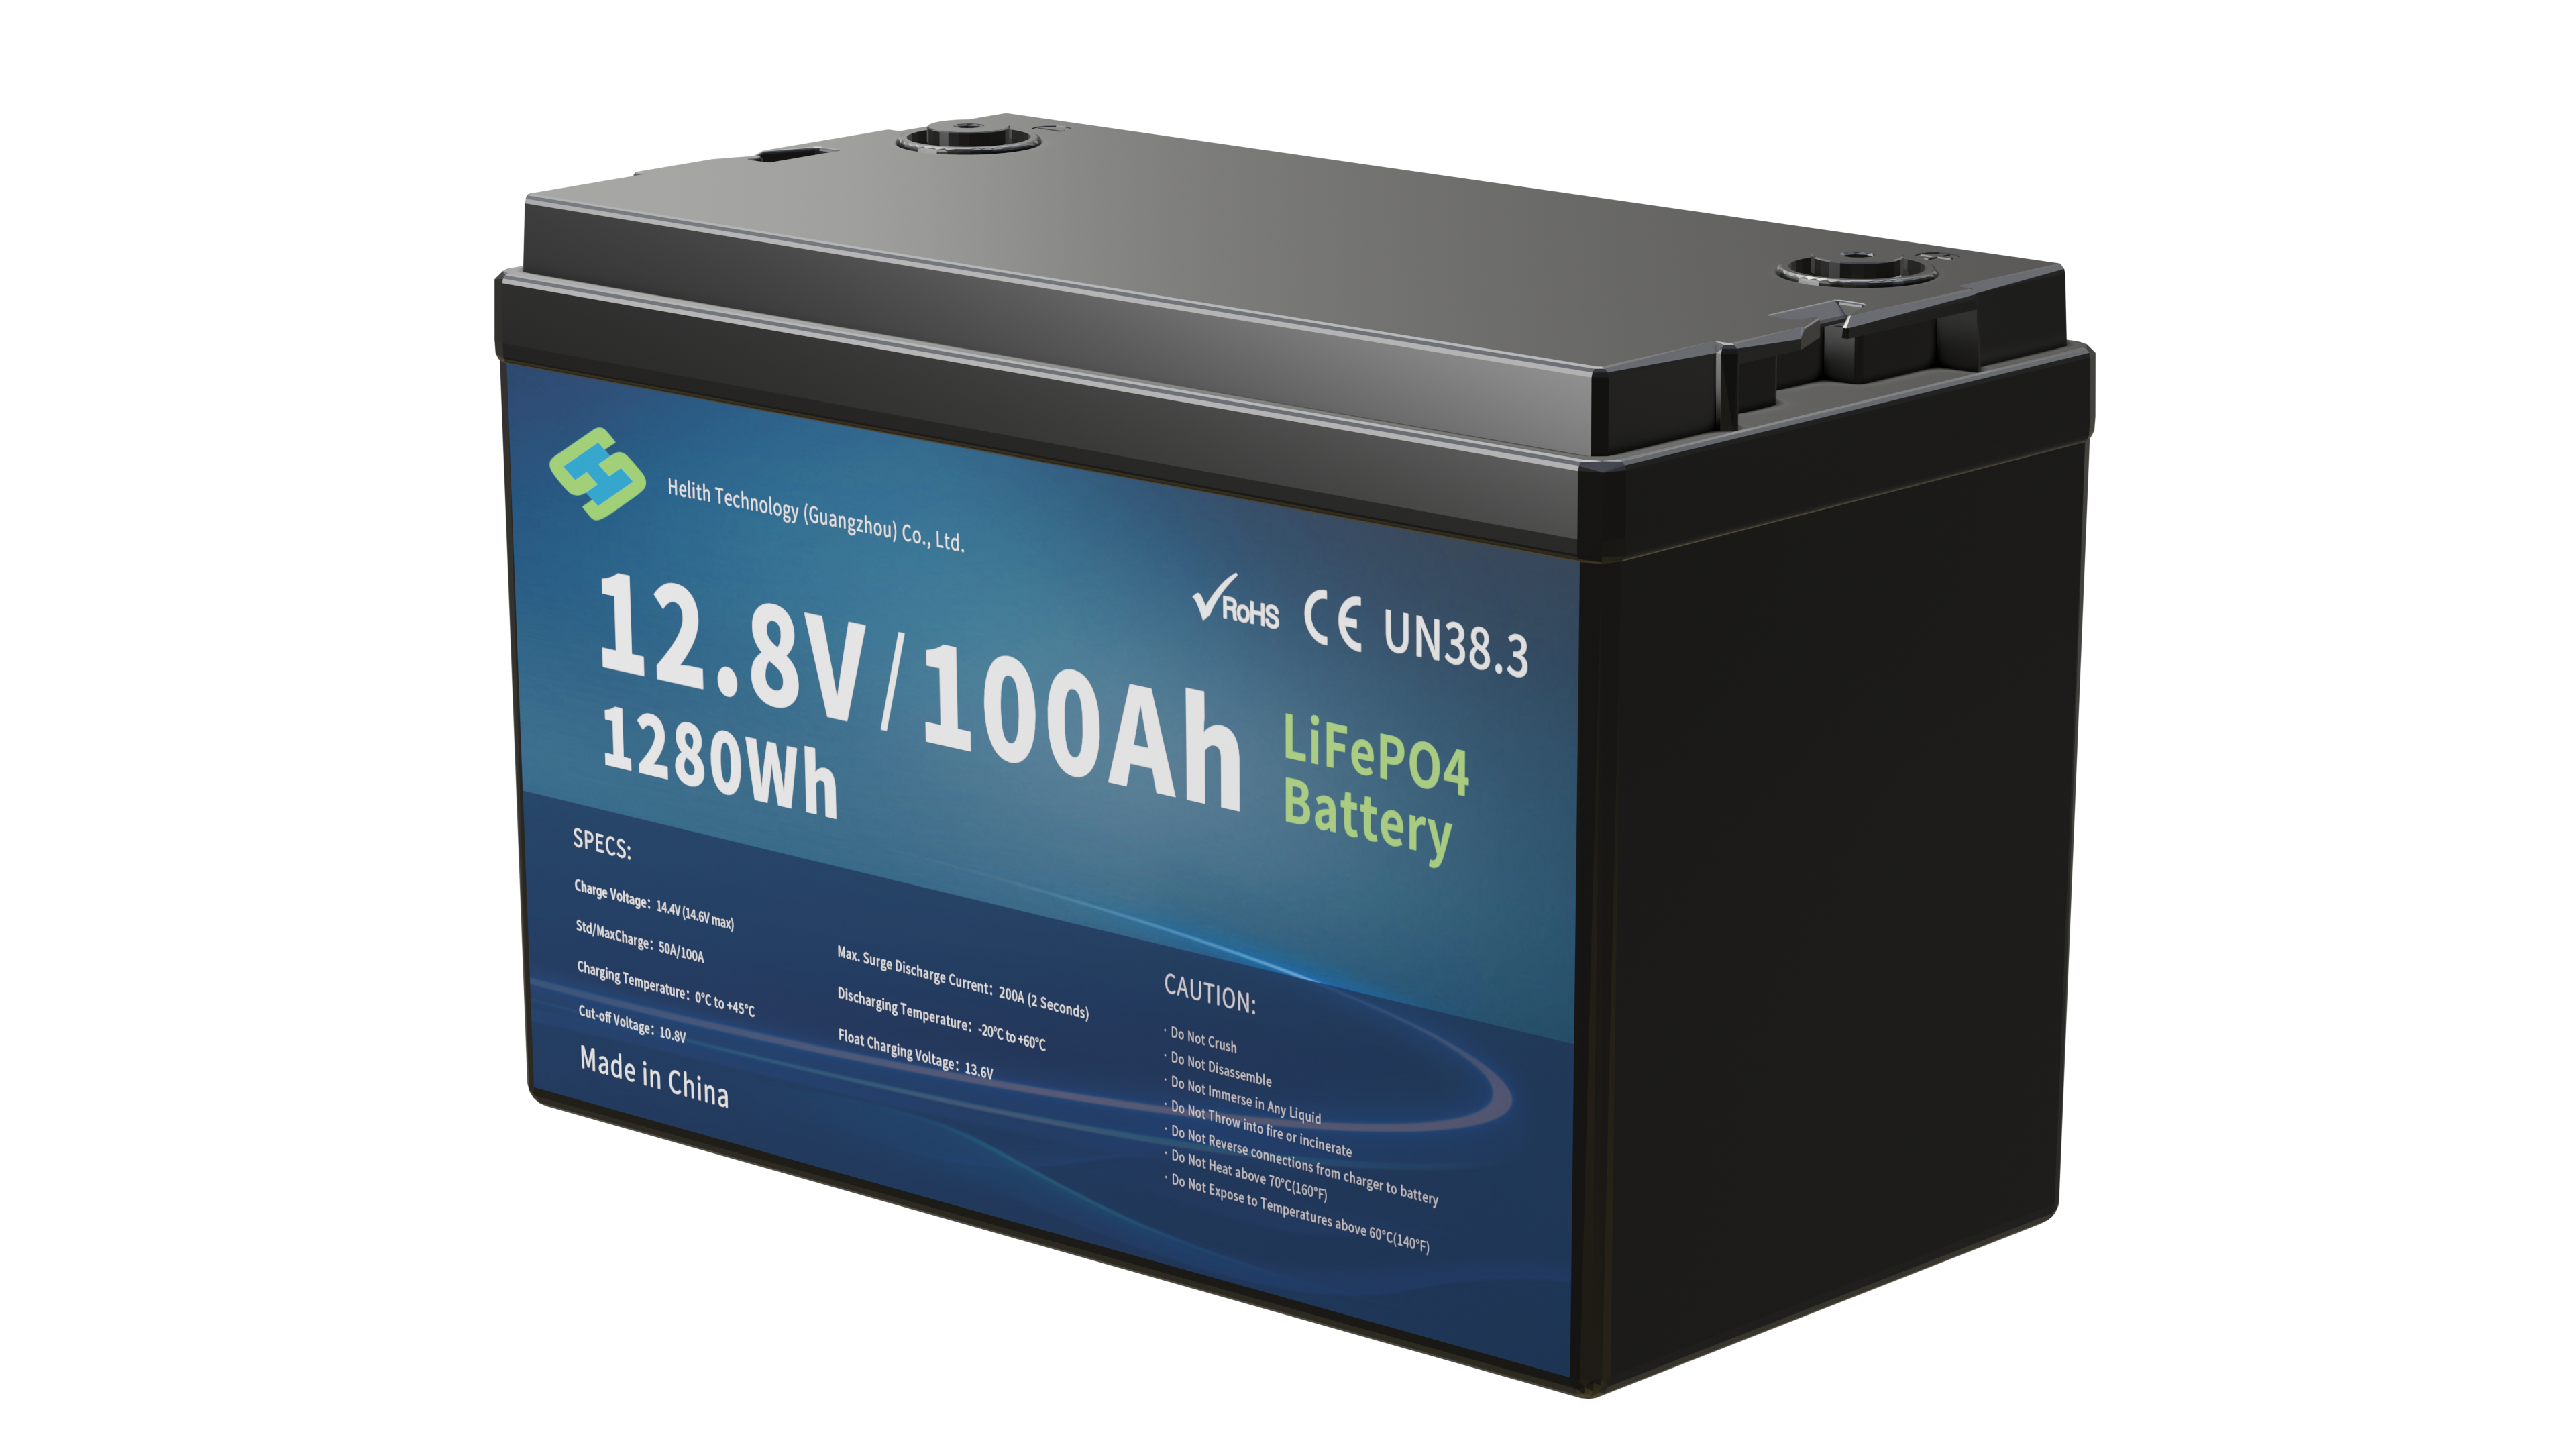 12.8V 100Ah 1280Wh LiFePO4 Battery Pack